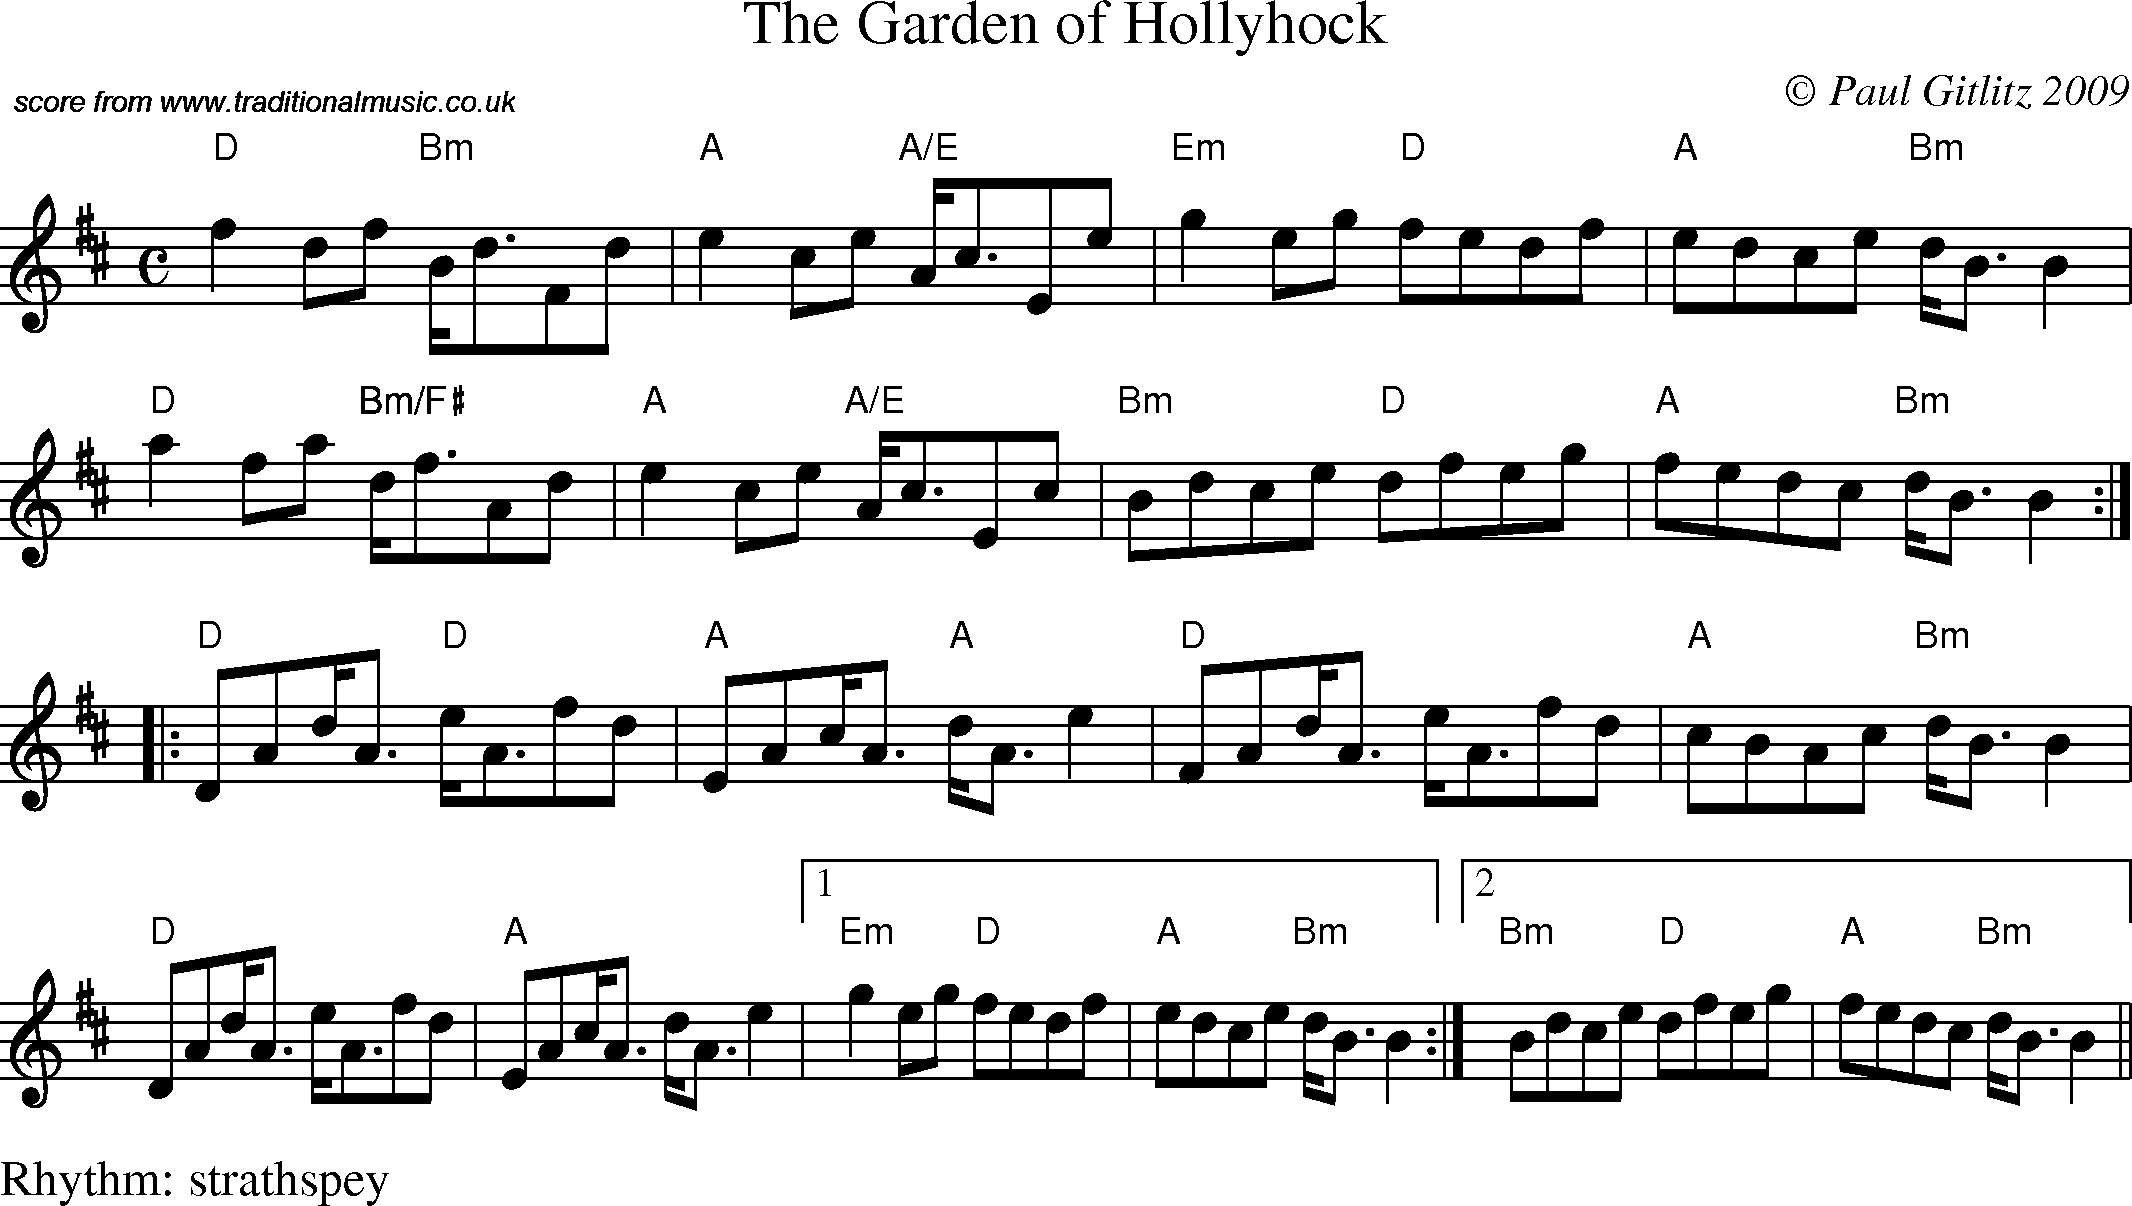 Sheet Music Score for Hornpipe/Strathspey - Garden of Hollyhock, The